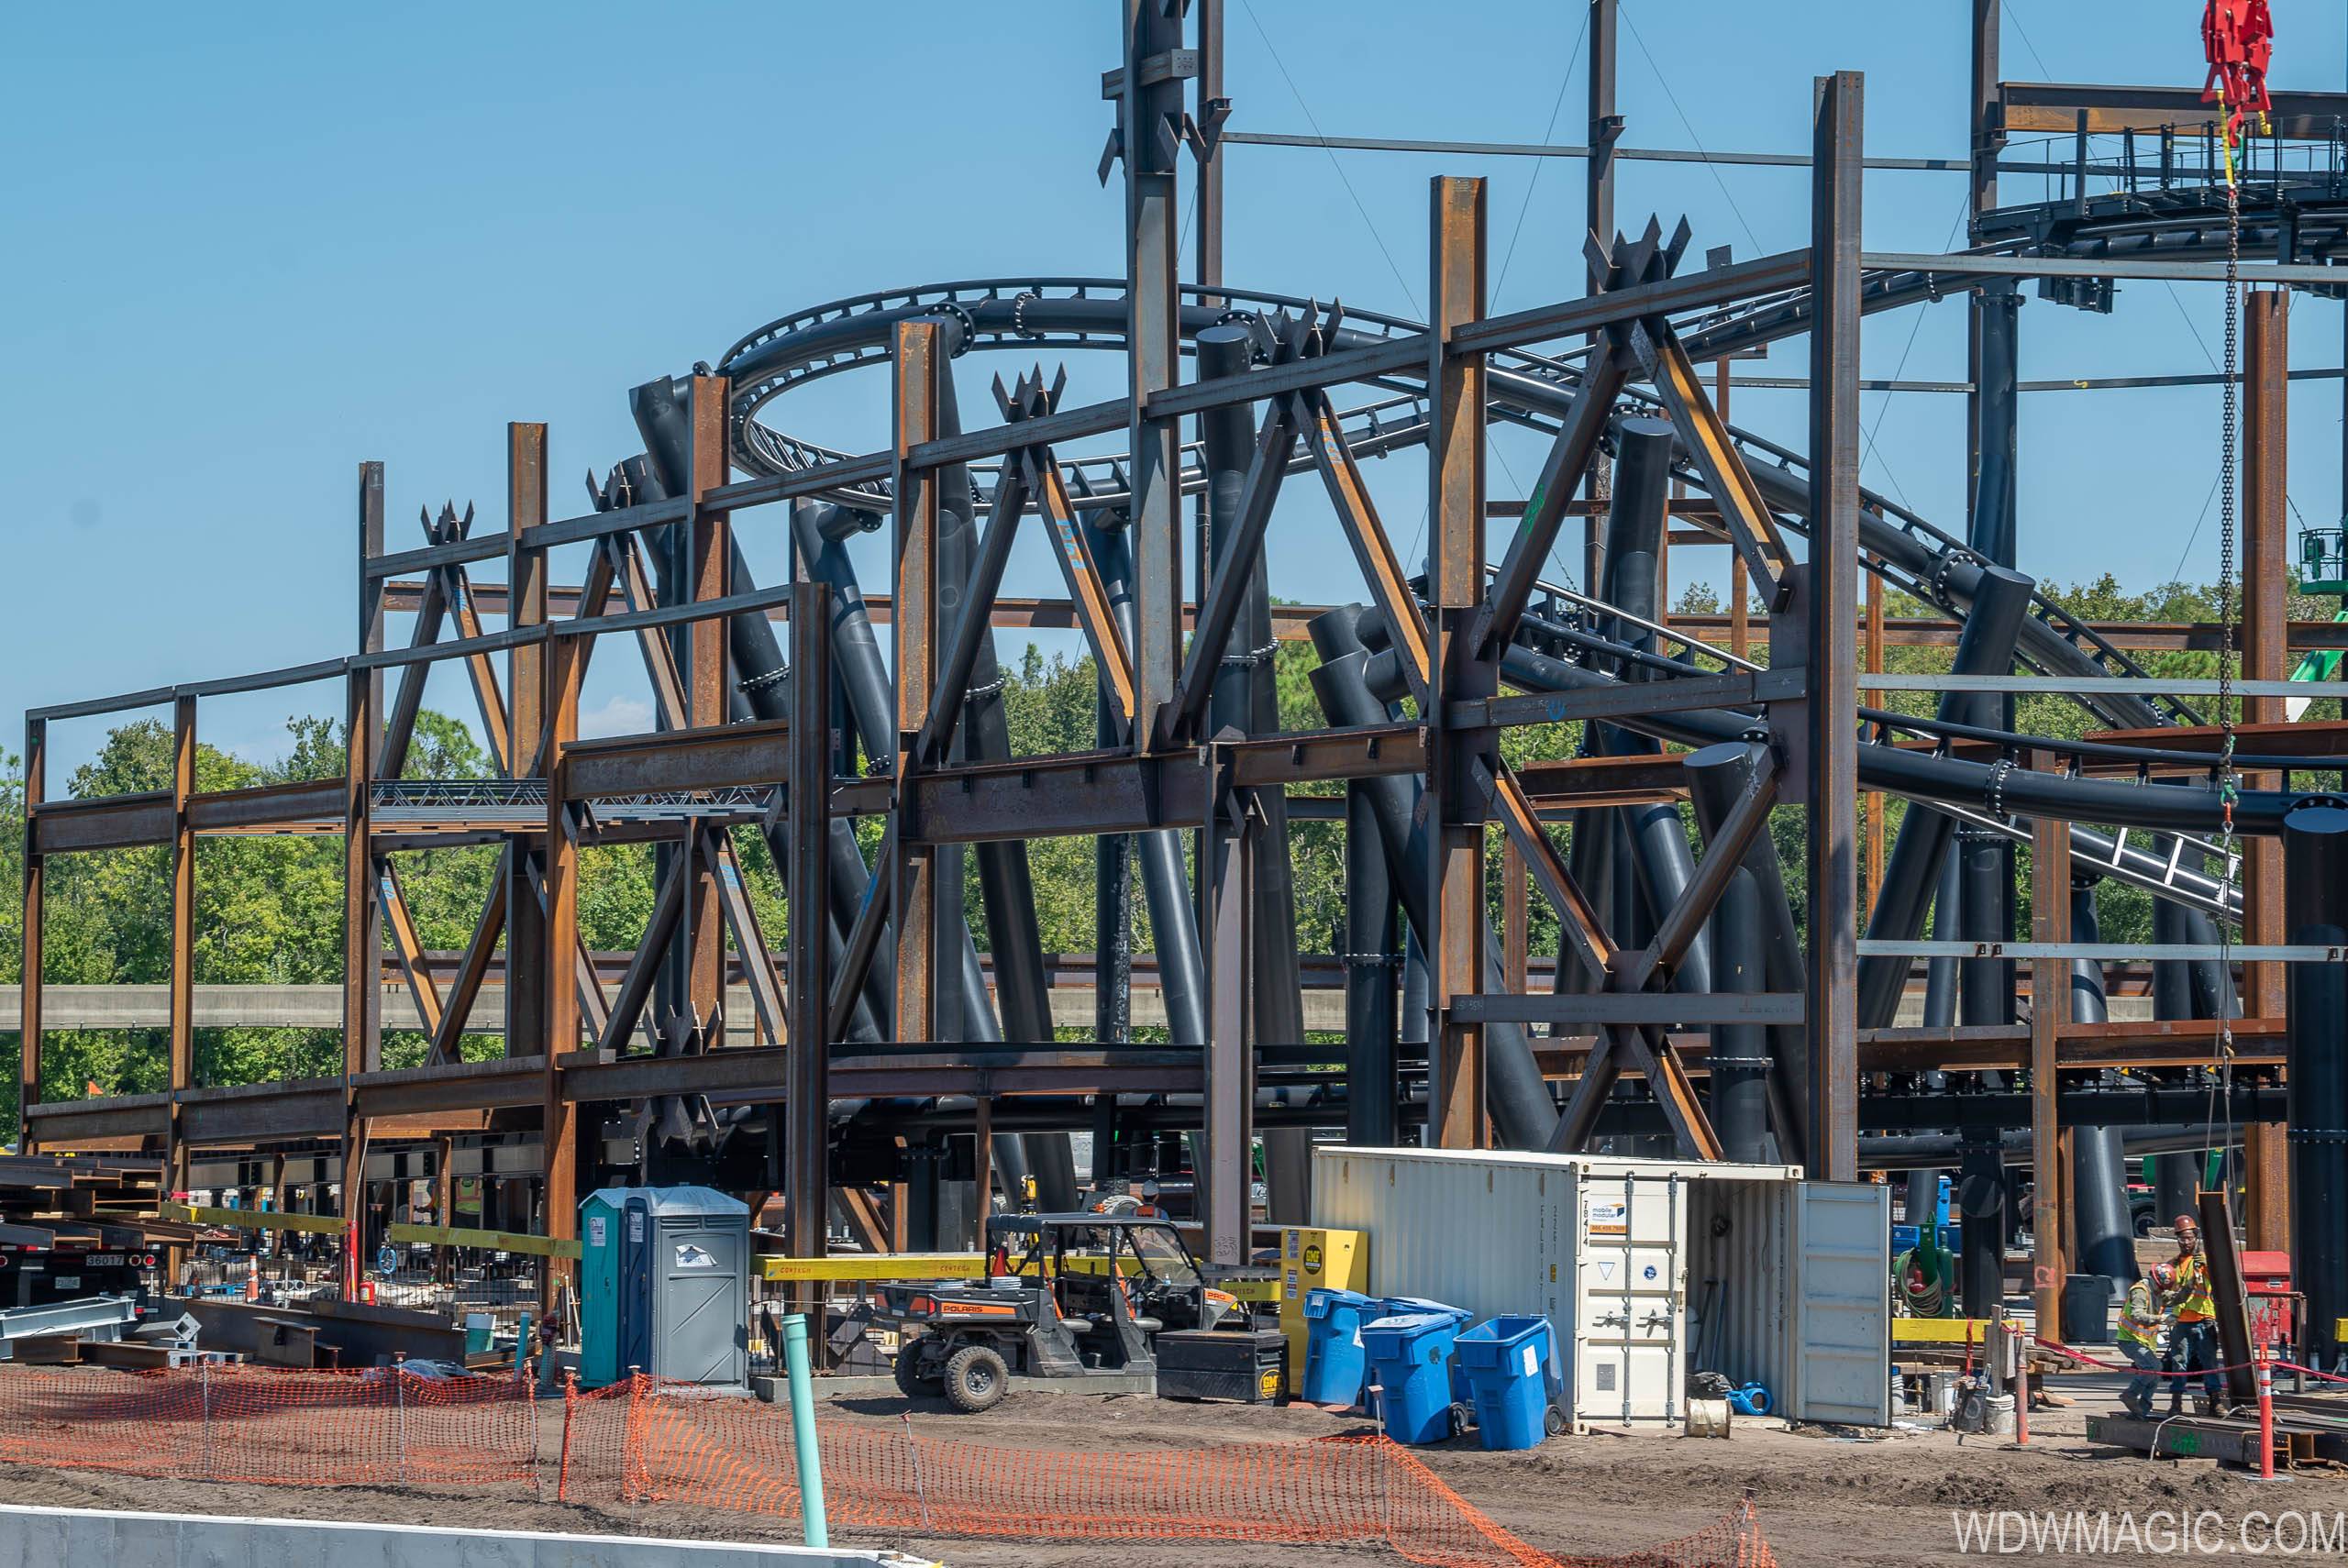 TRON Lightcycle Run construction site - September 2019